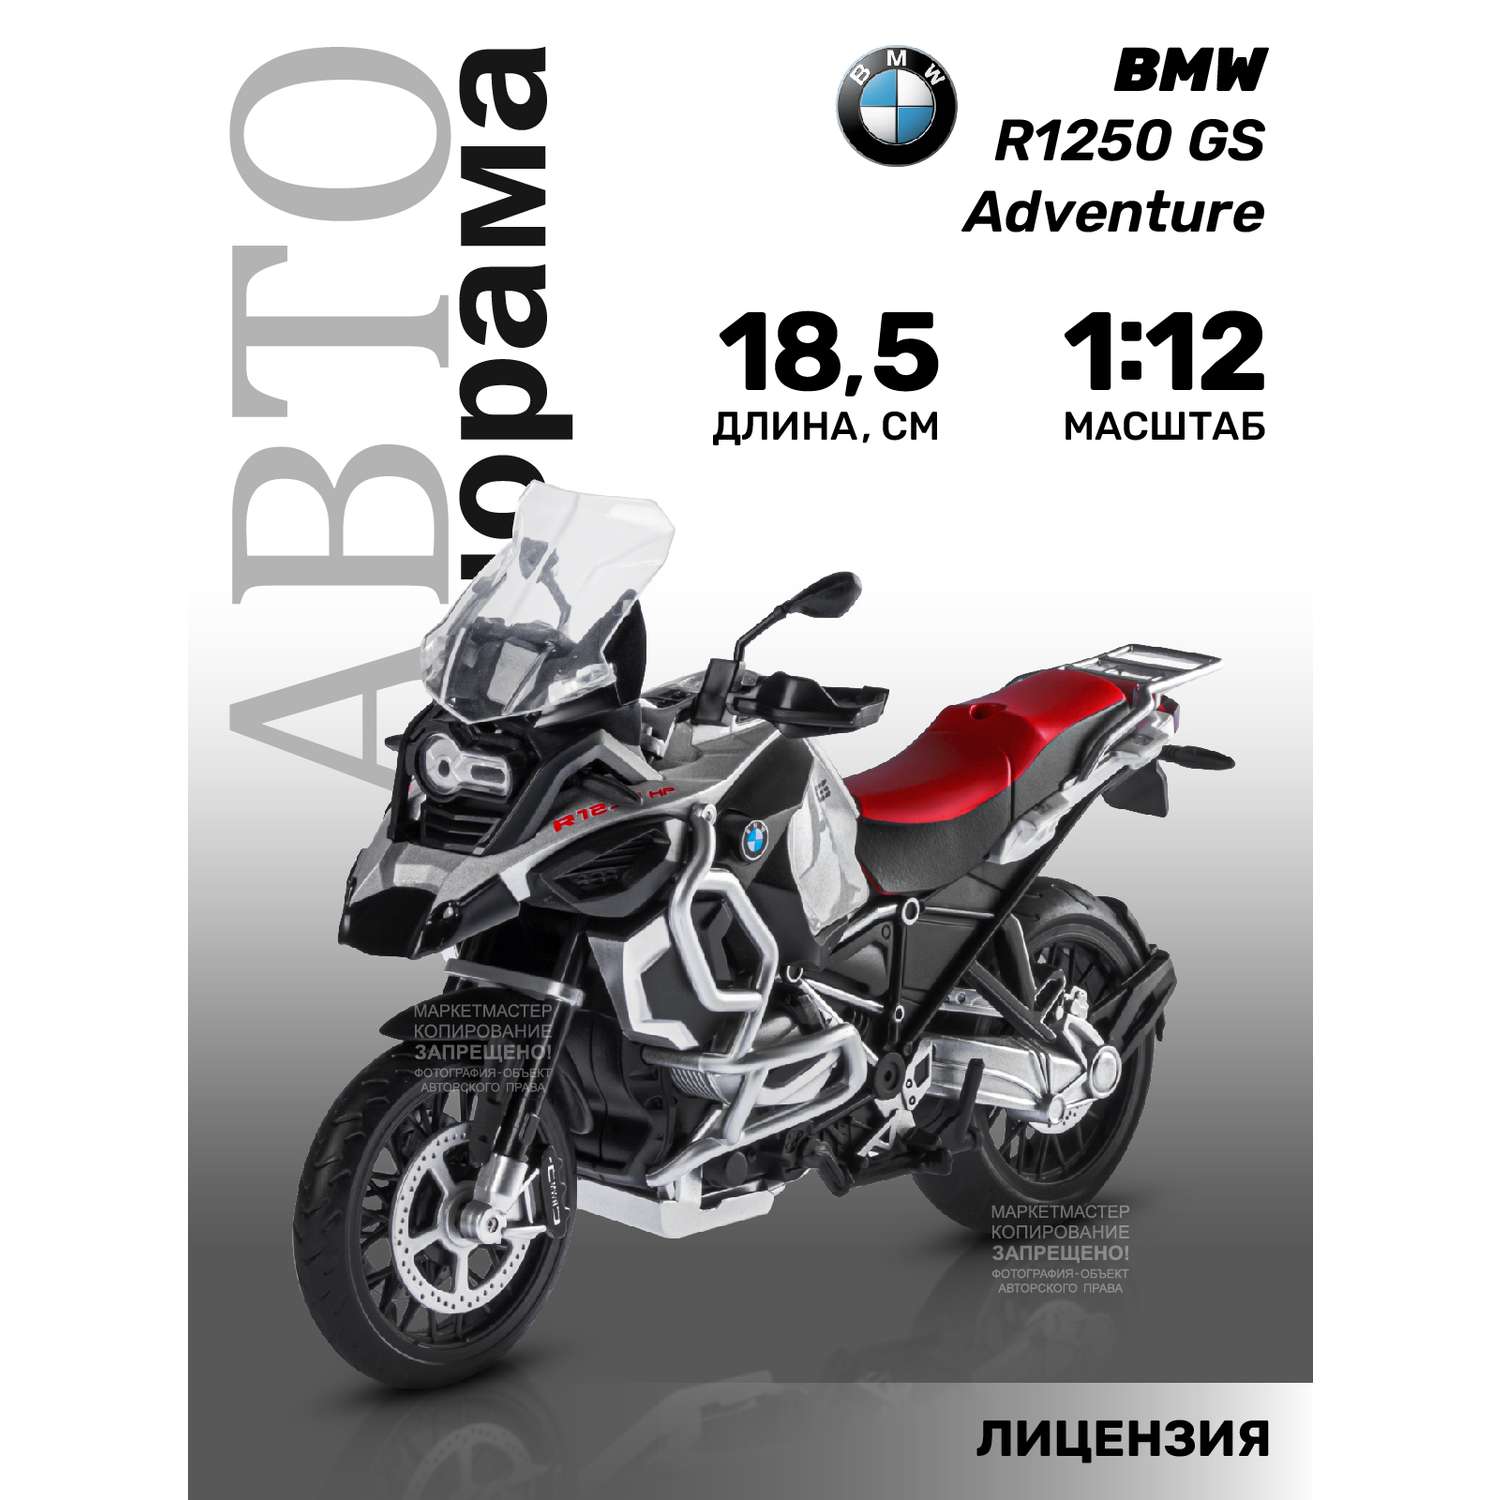 Мотоцикл металлический АВТОпанорама 1:12 BMW R1250 GS Adventure серебристый свободный ход колес JB1251615 - фото 1